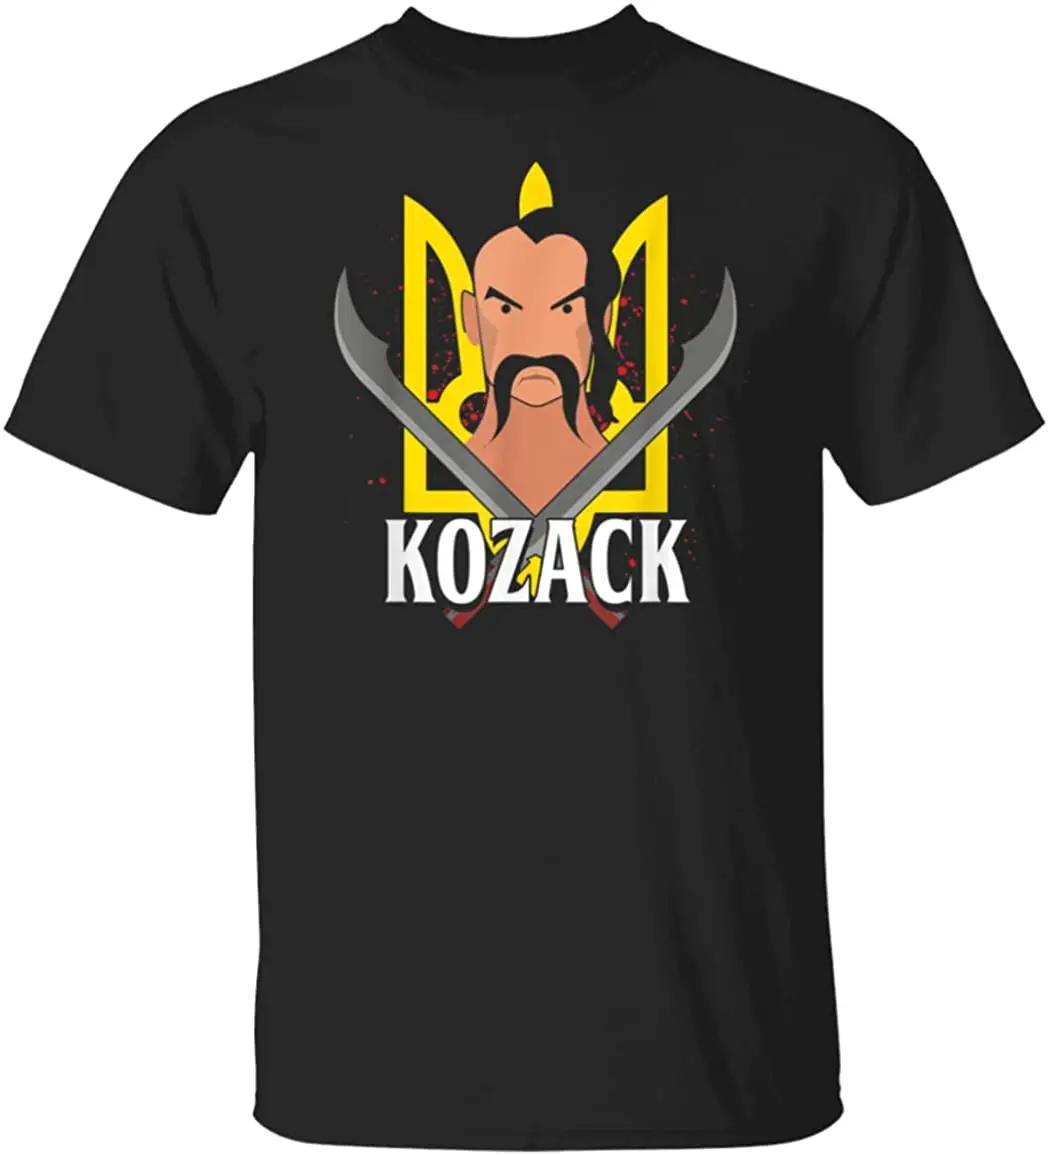 Cossack ũ̳ ũ̳ Kiev Homeland Country State T-Shirt Mens 100%  Casual T-shirts Loose Top Size S-3XL